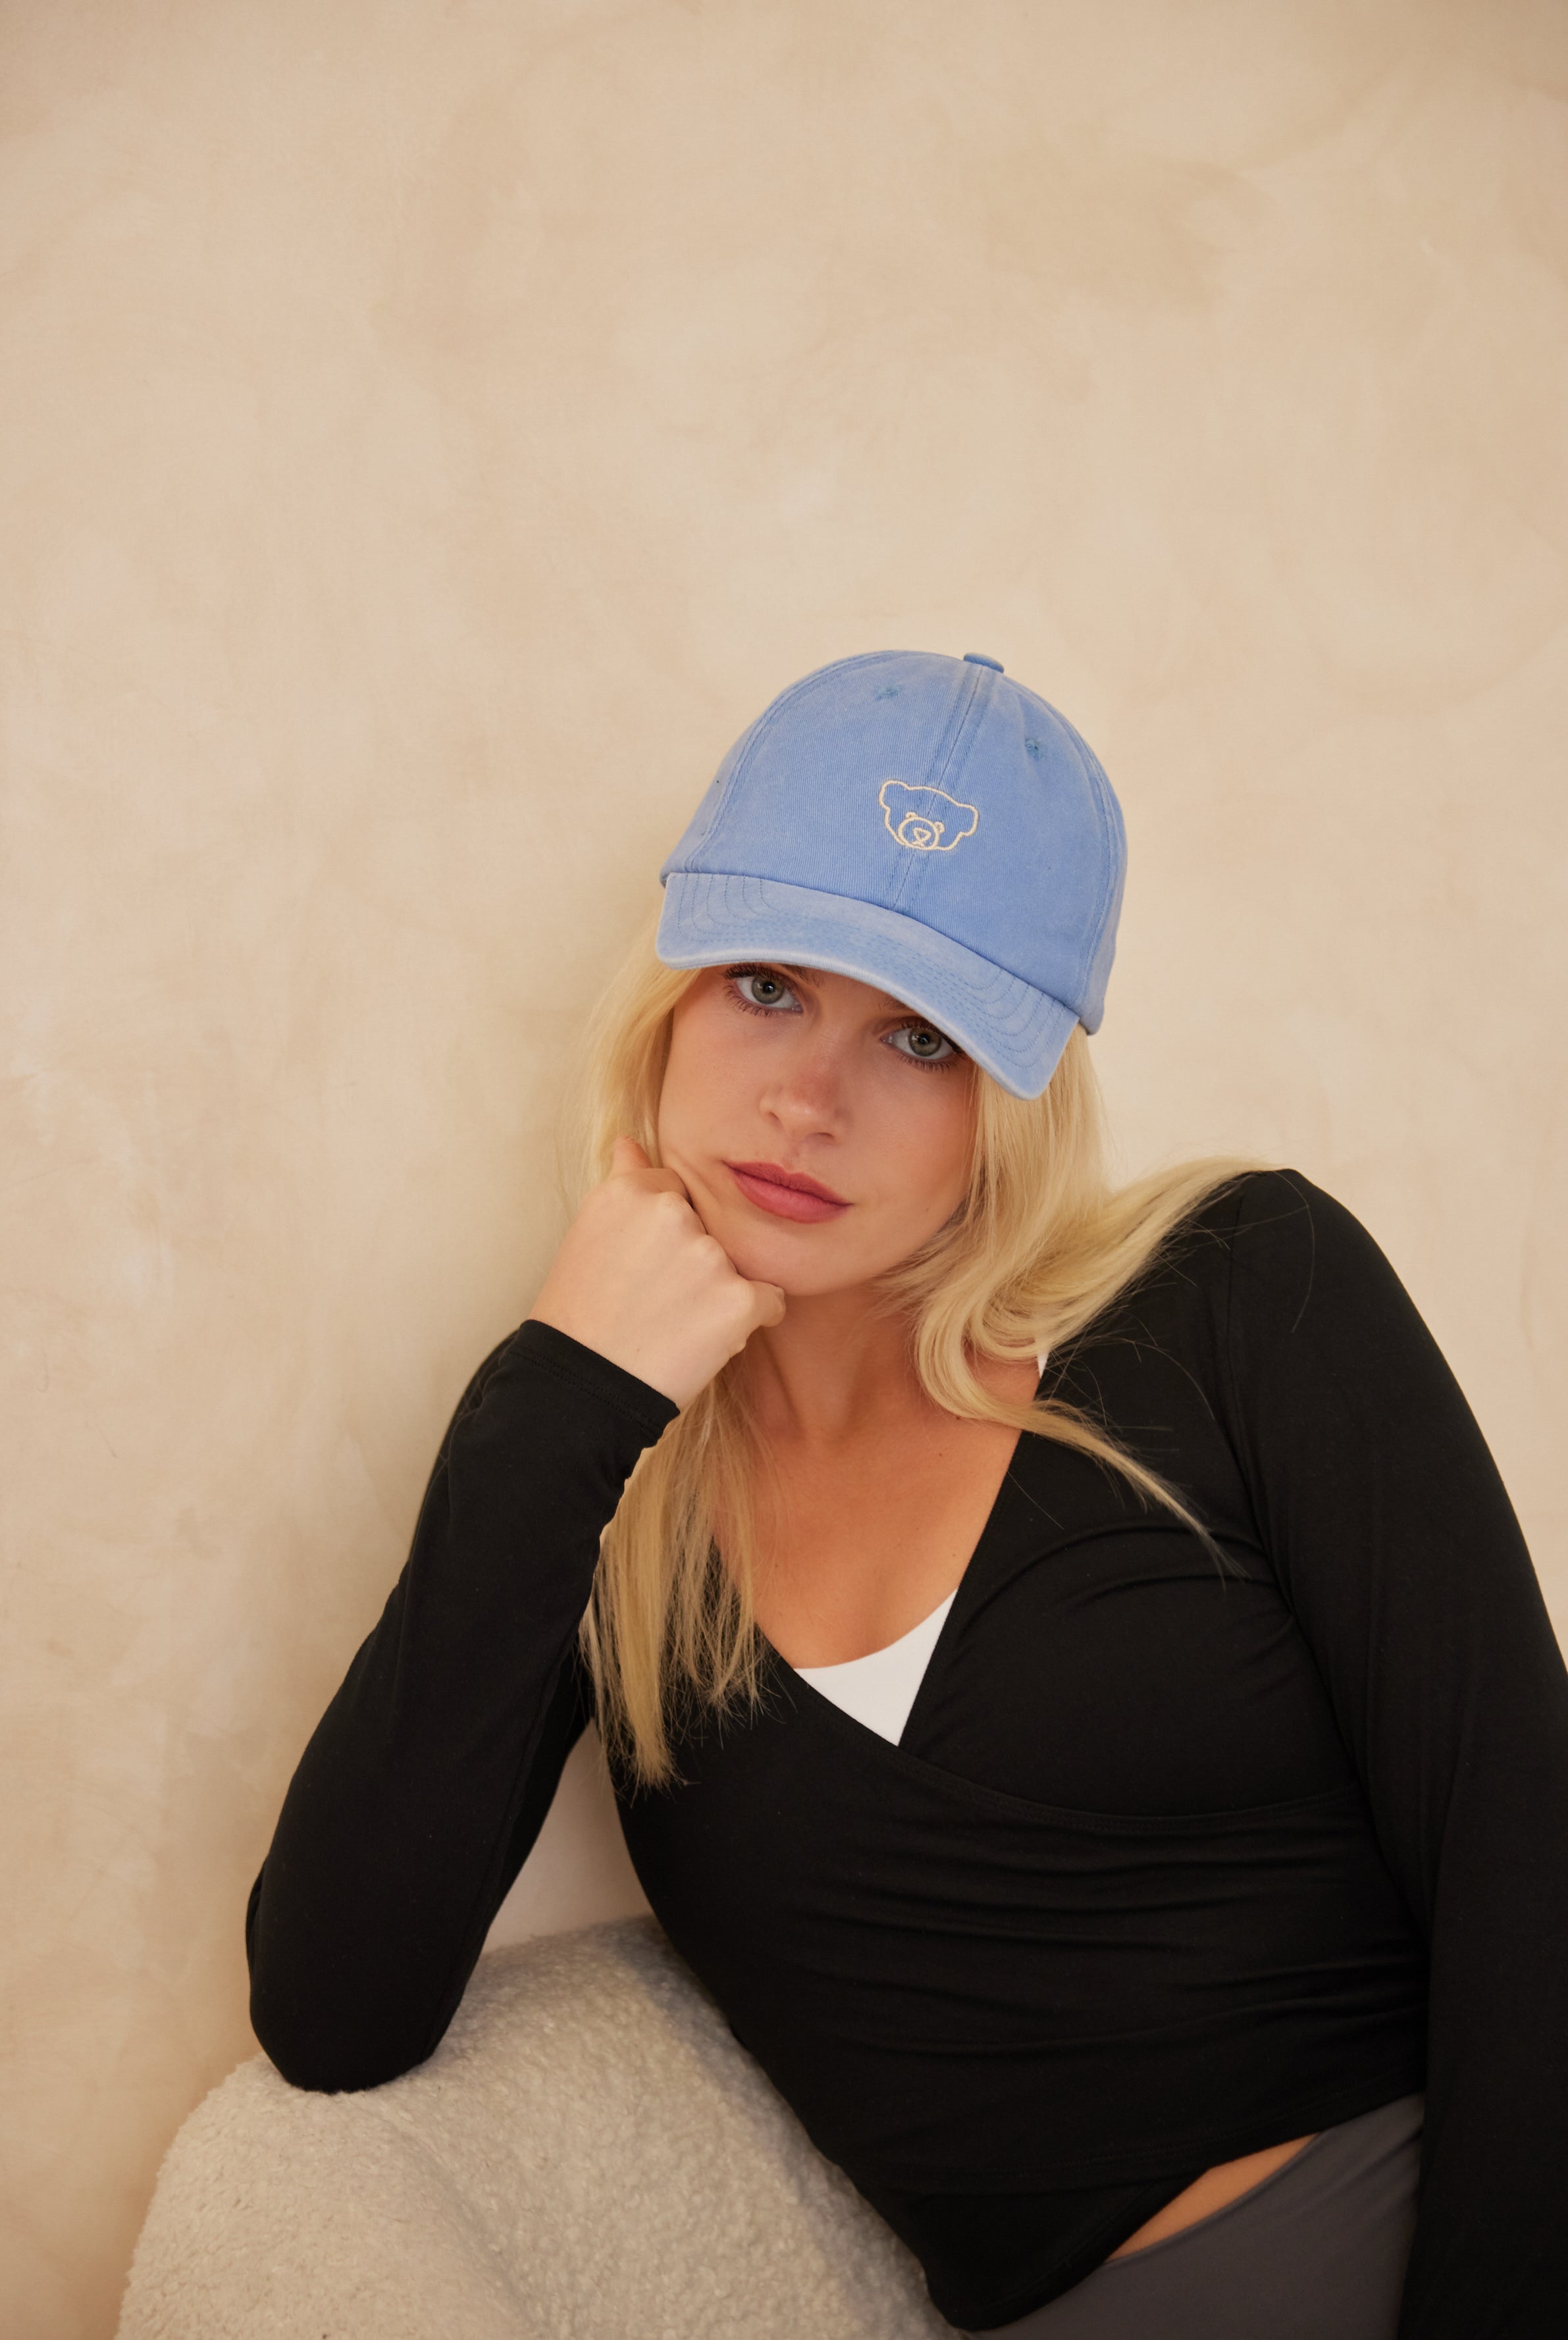 My Accessories London Bear Baseball Cap in Blue | cap | caps | hat | hats | transitional | summer | spring | winter | autumn | minimal | athleisure | sporty | cute | embroidered cap | embroidered | embroidery | activewear | loungewear | bear cap | embroidered cap | embroidered hat | women's hats | women's hat | women's accessories | blue cap | blue hat